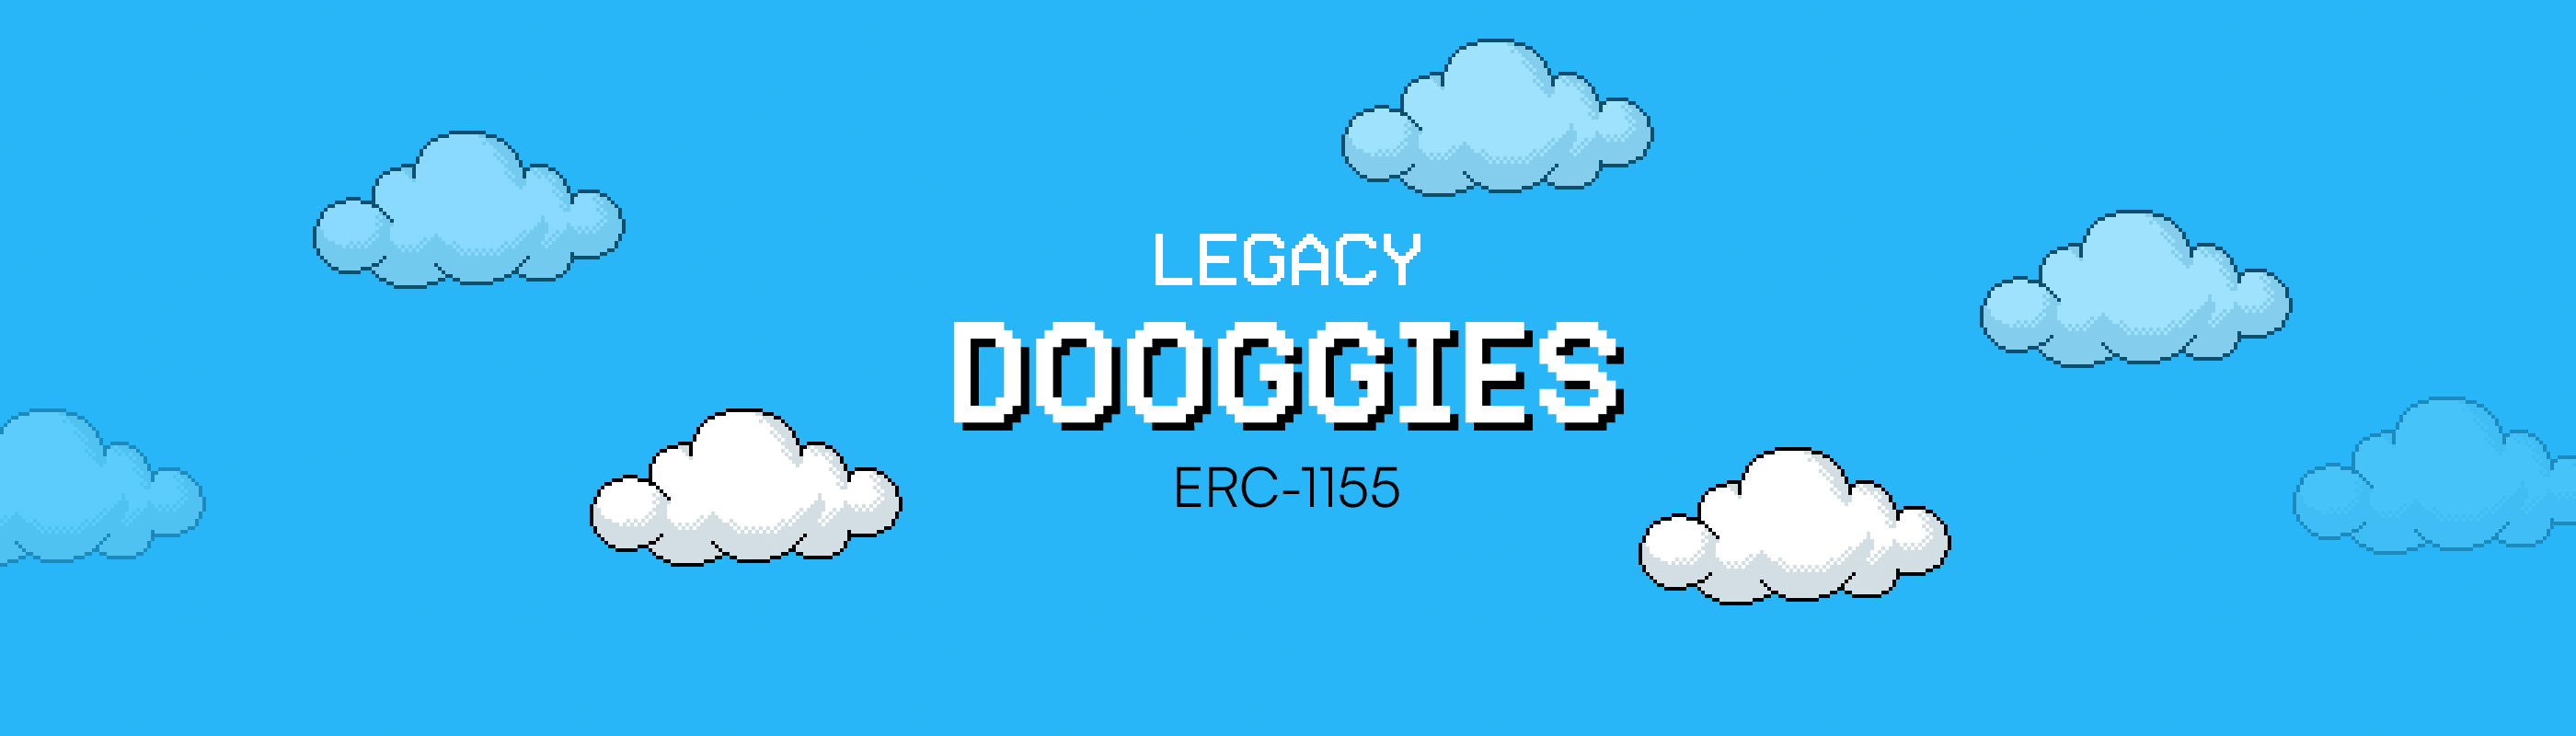 Dooggies - Legacy